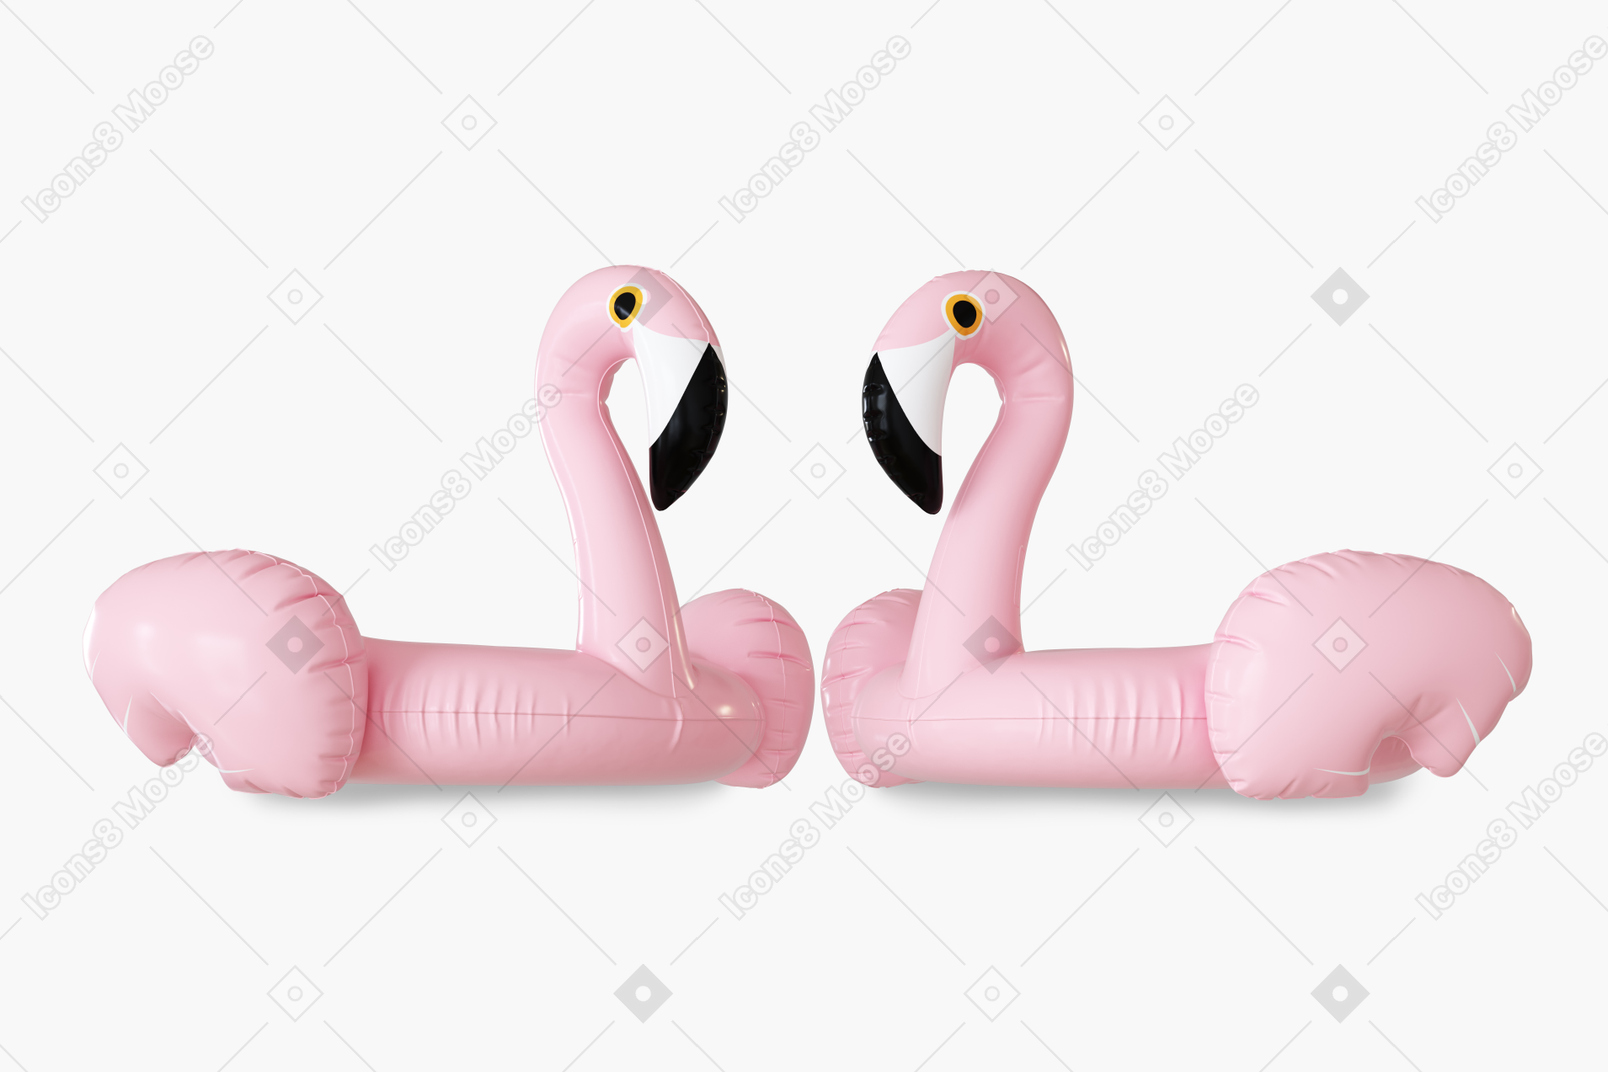 Два резиновых кольца фламинго на белом фоне